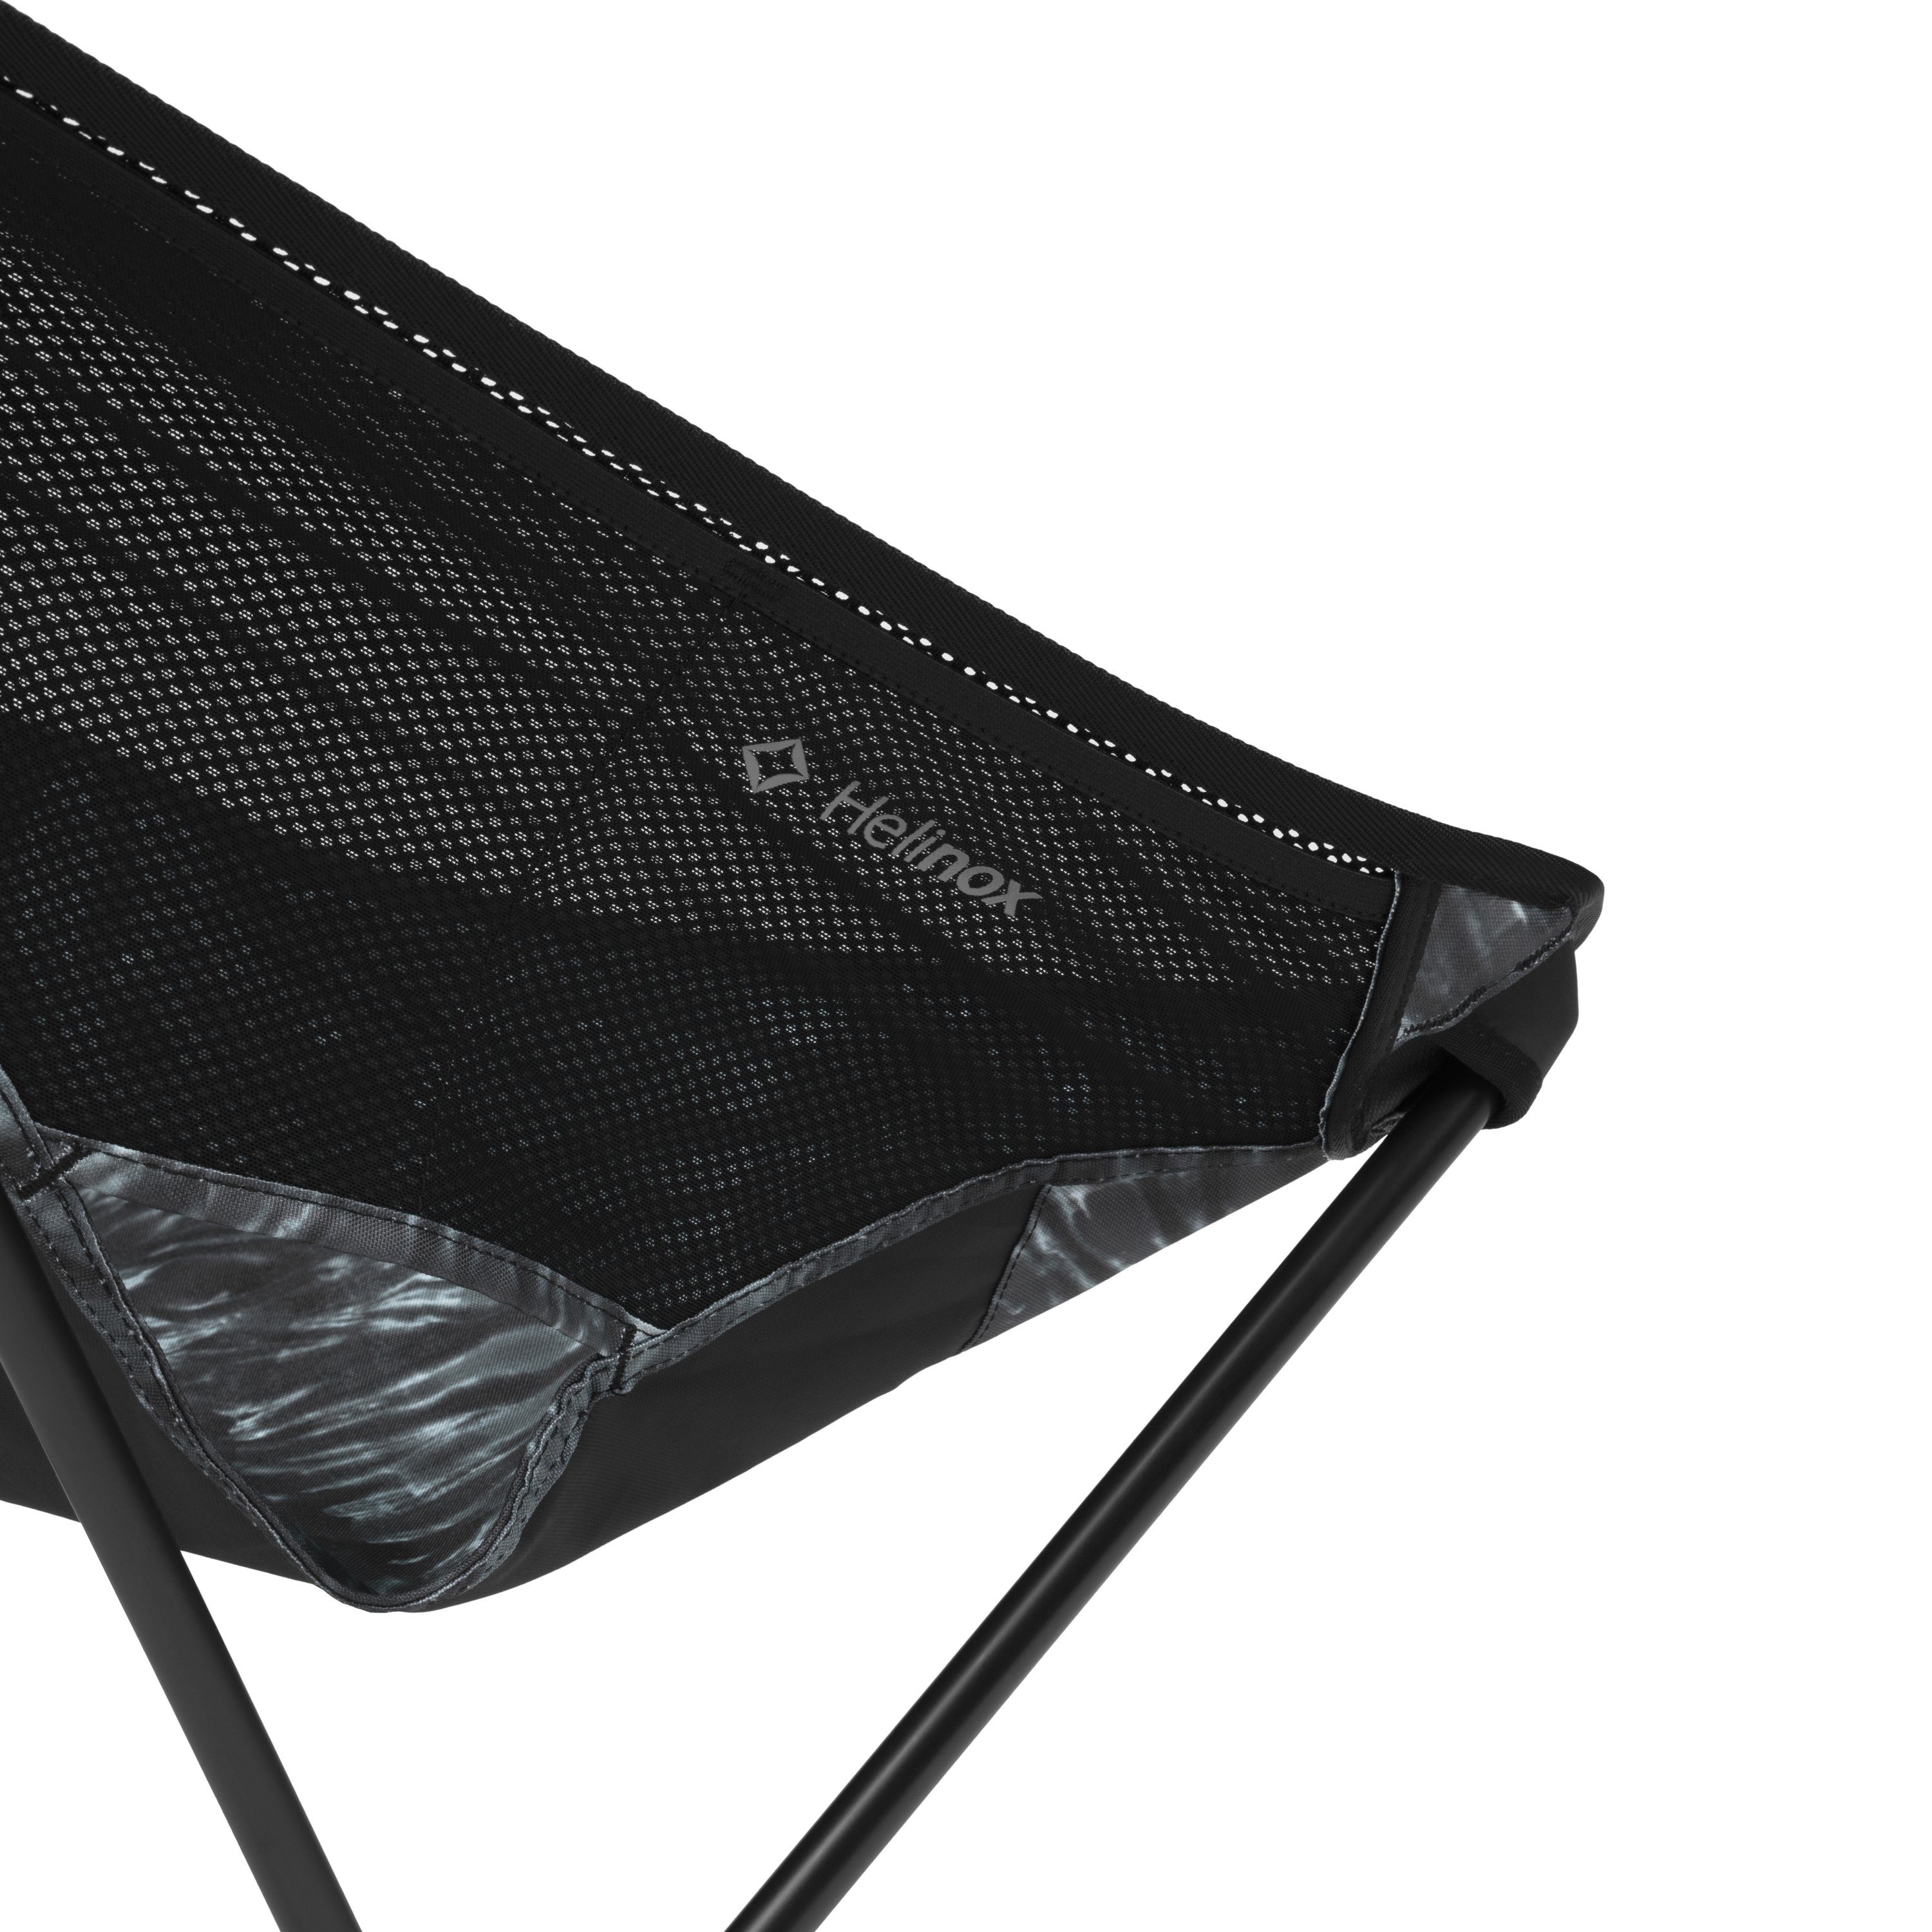 / Dye bis kg) Helinox Campingstuhl (Gewicht 145 Campingstuhl Tie Helinox 1,18kg Chair Black Two